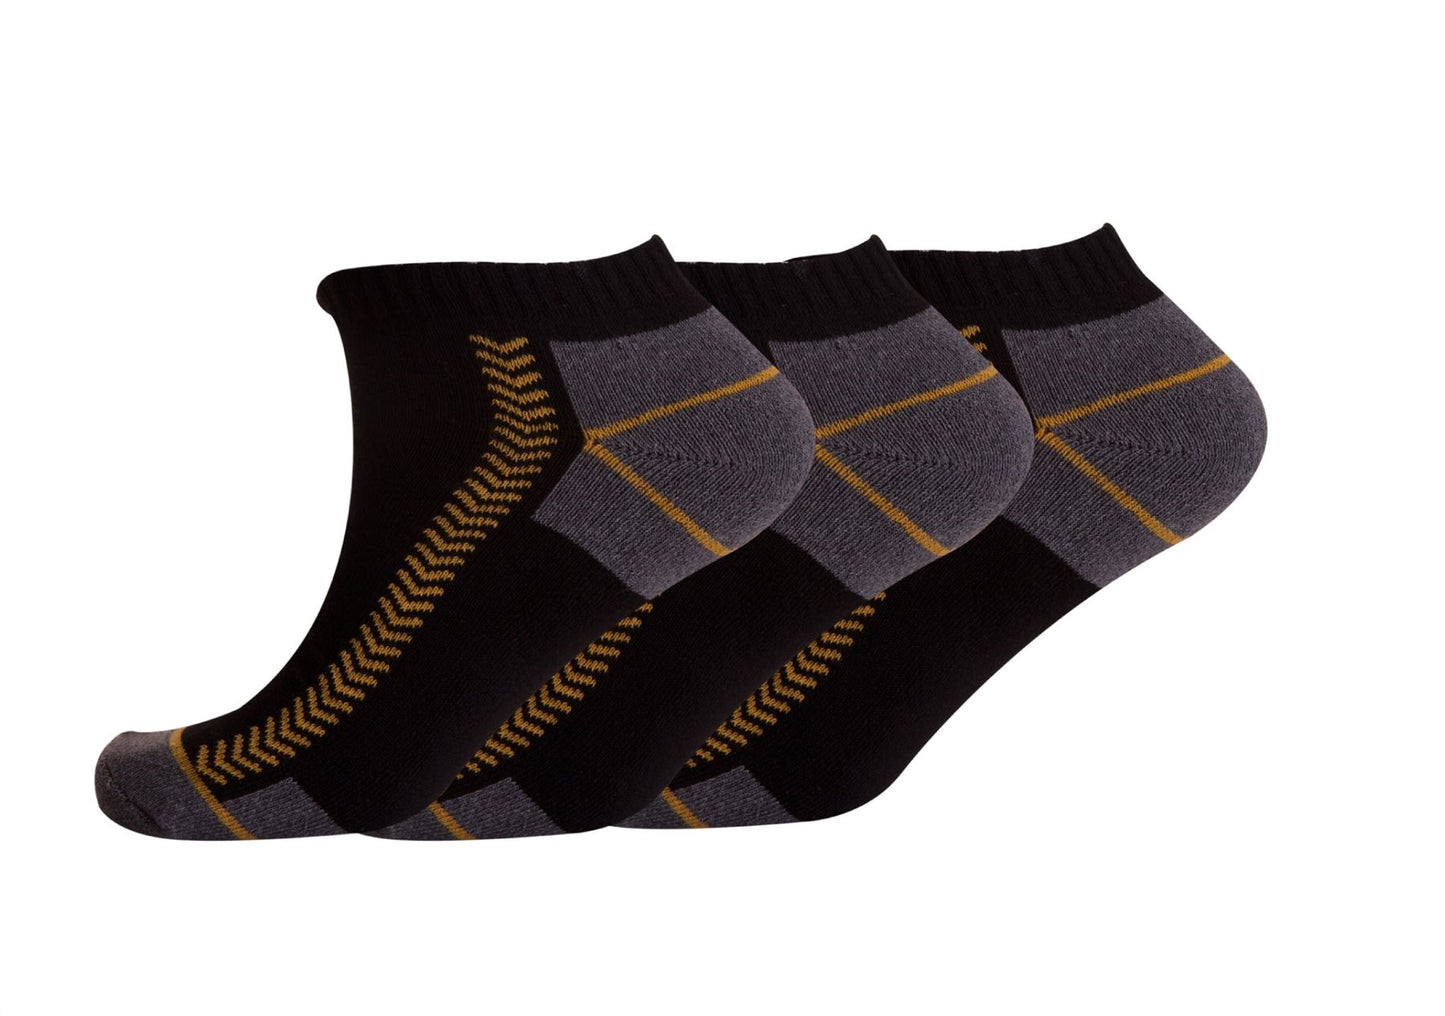 Sports Work Boot Outdoor Soft Comfortable Sole Heel Trainer Ankle Socks Black/Grey UK 6-11